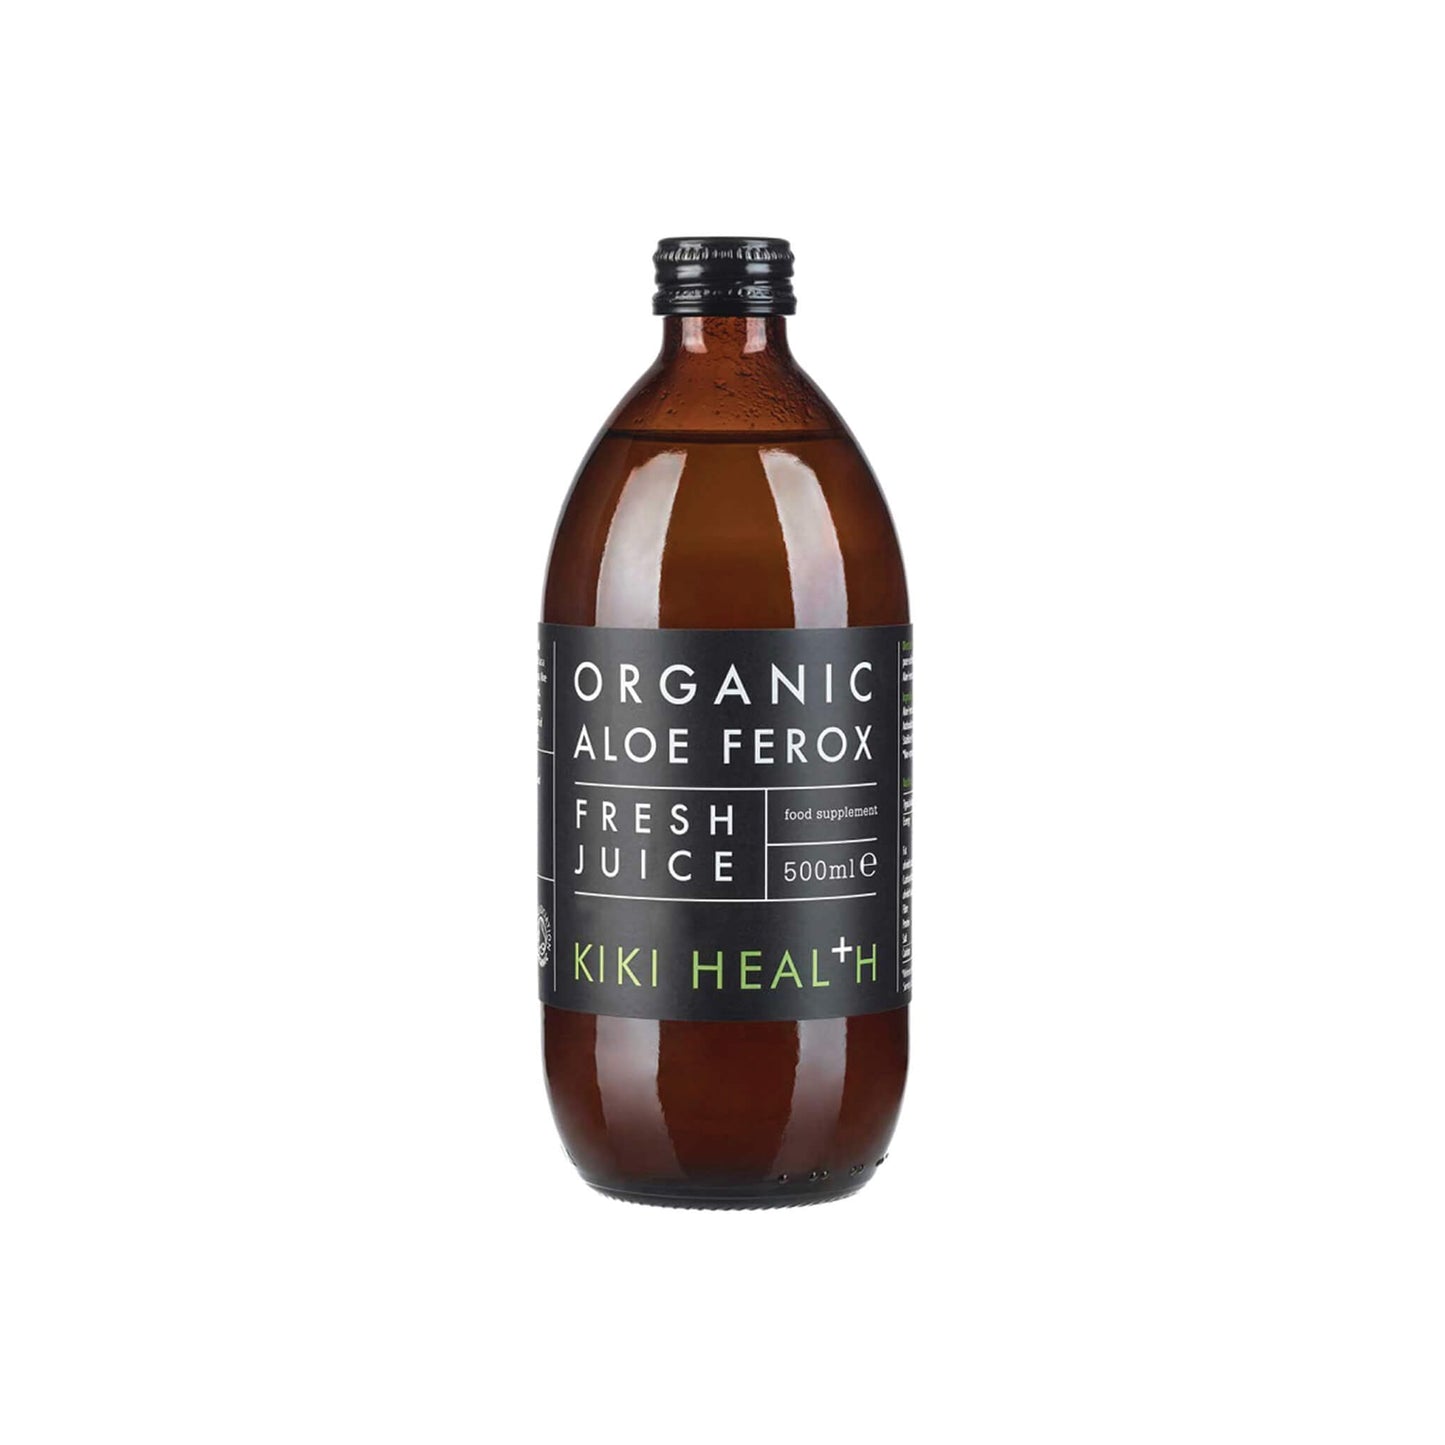 Kiki Health Aloe Ferox Juice Organic - 500 ml.